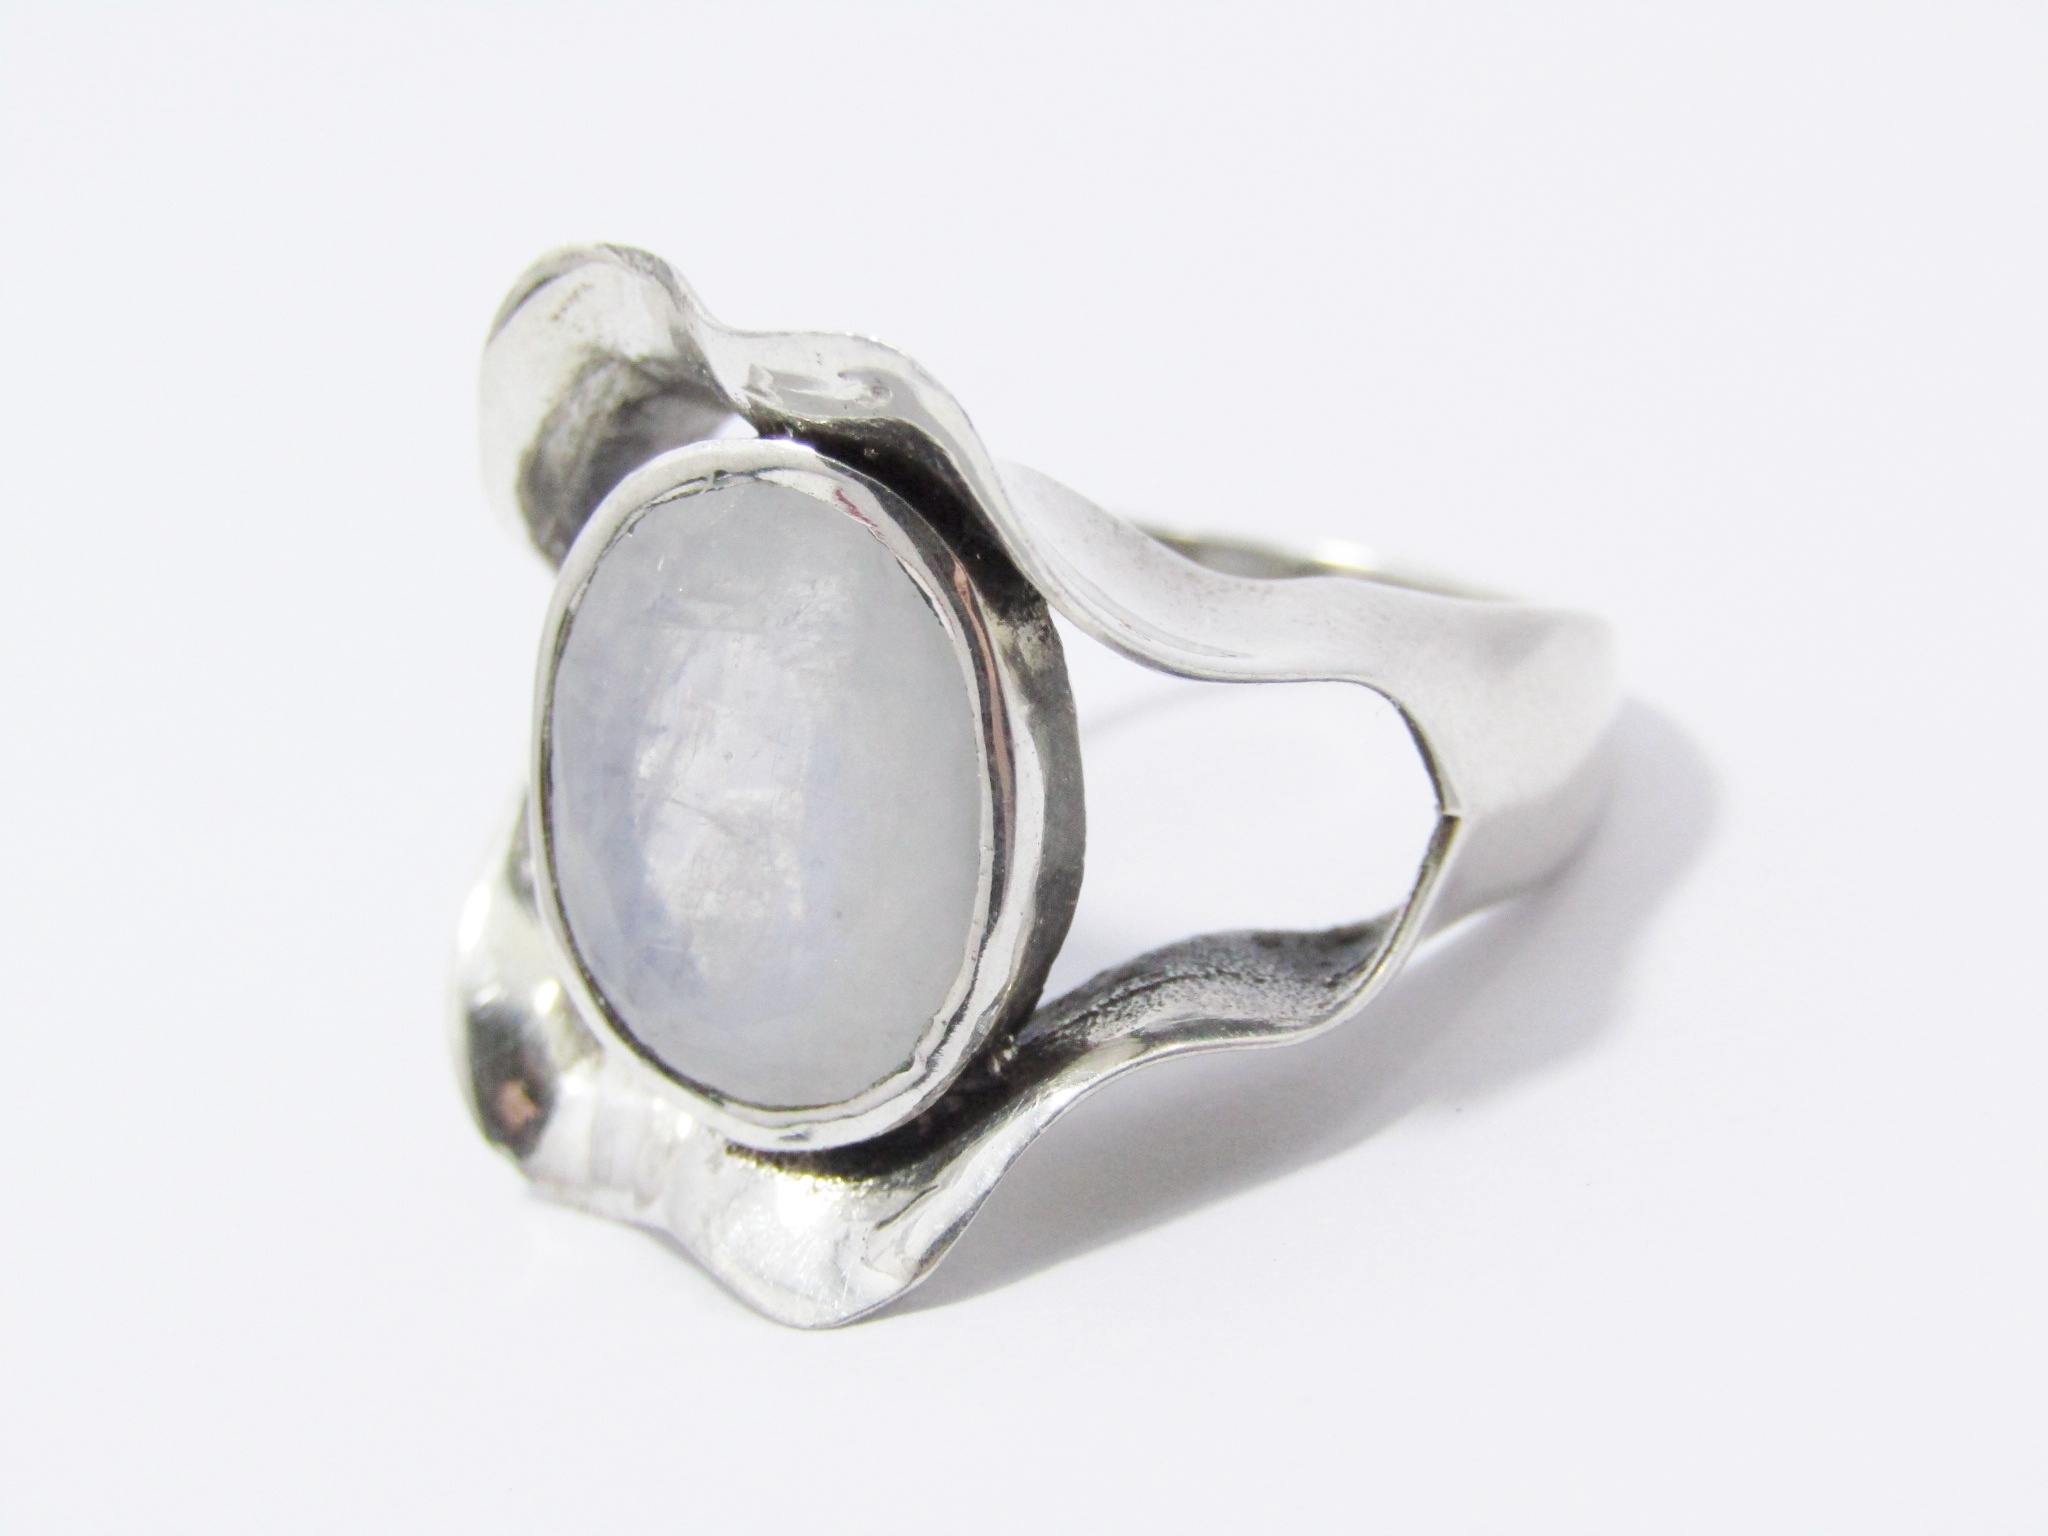 A Lovely Handmade Moonstone Ring in Sterling Silver.